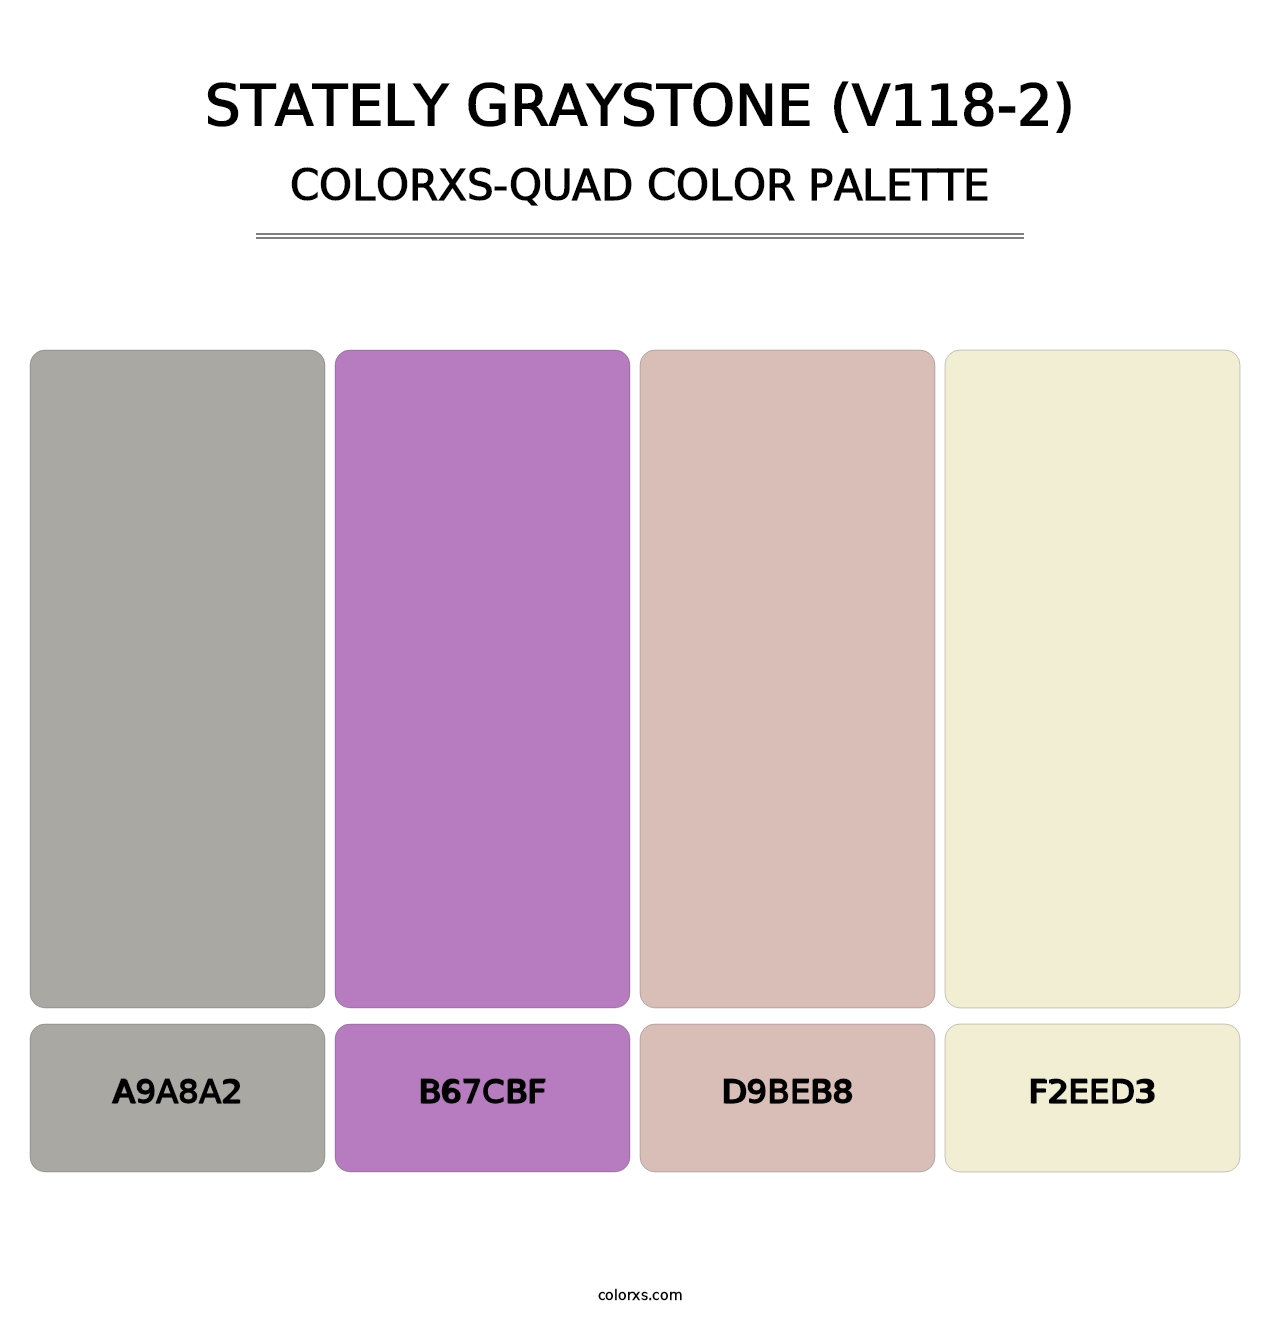 Stately Graystone (V118-2) - Colorxs Quad Palette